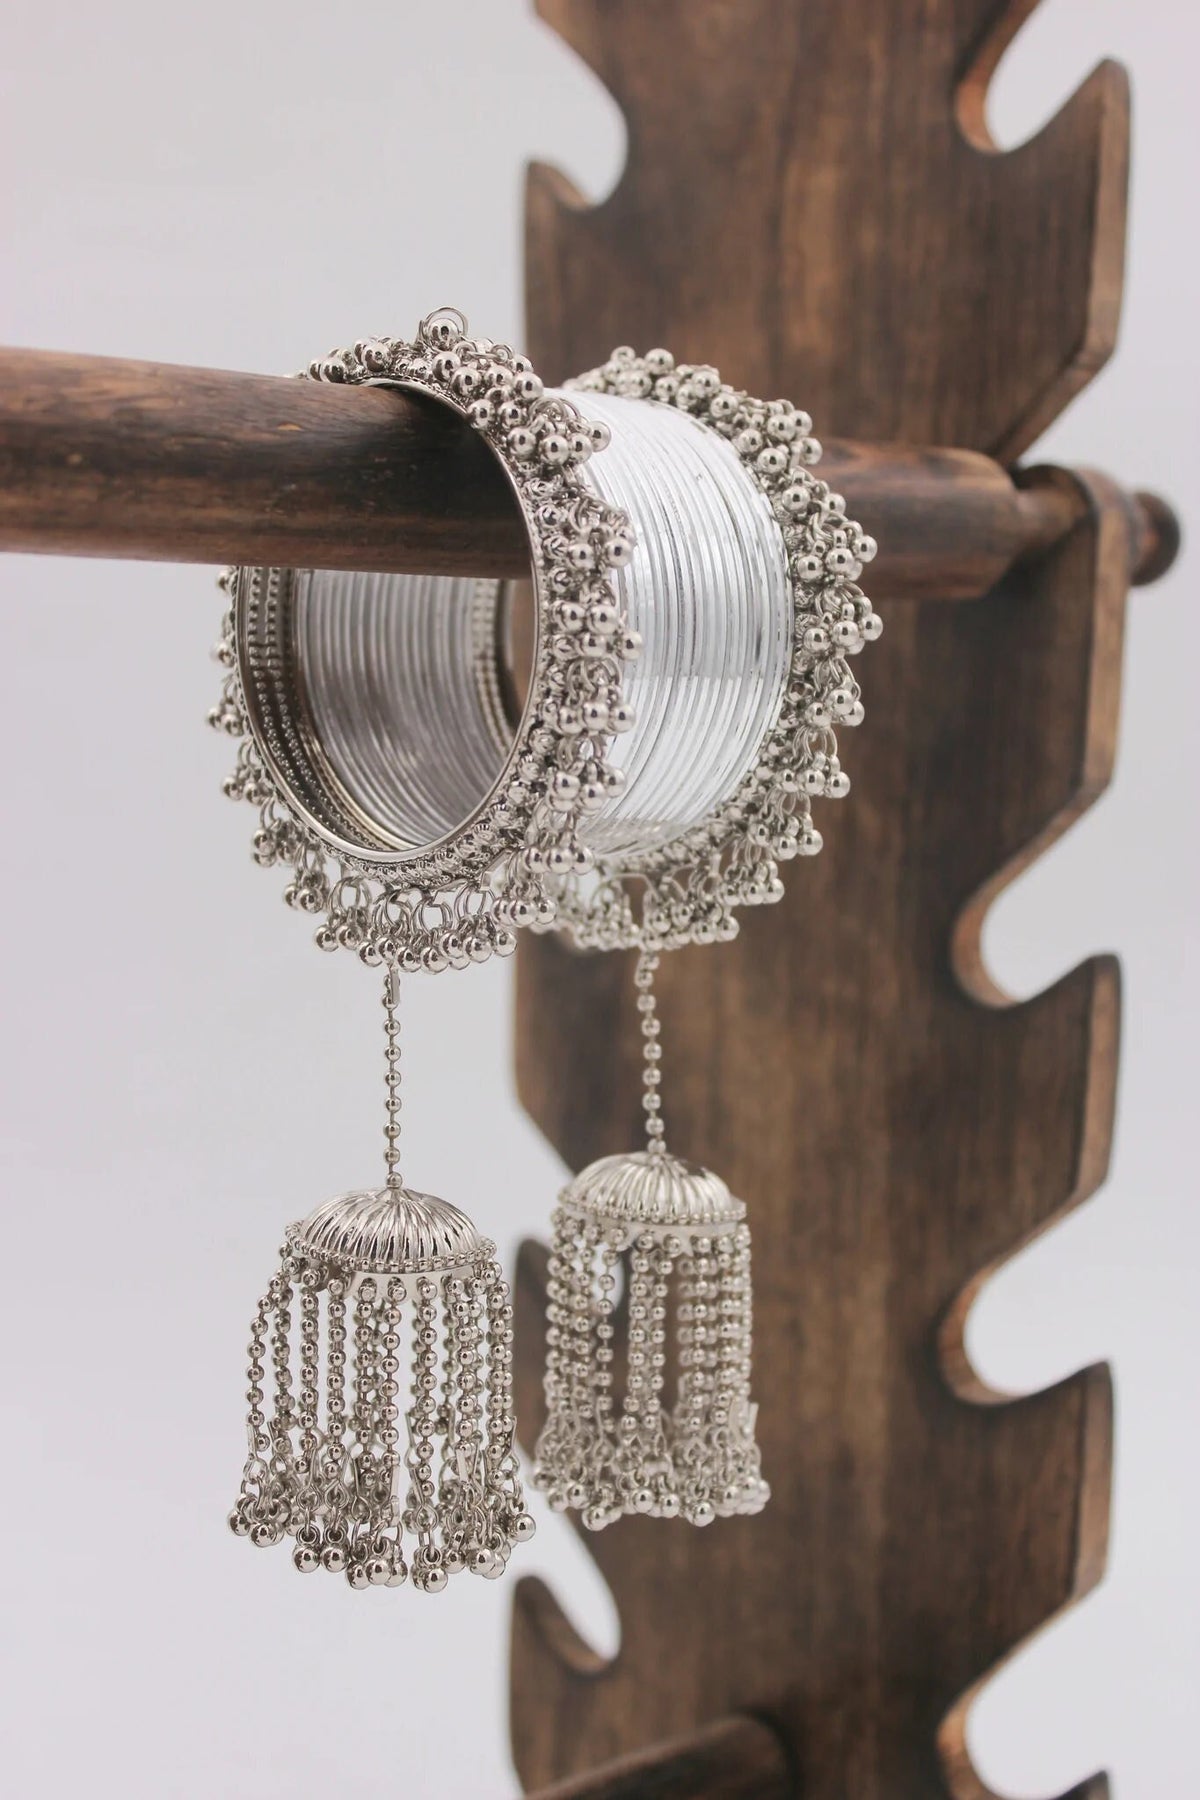 Shinning Ghungroo Bangle Set With Silver Tassel Bangles, Latkan Wedding Bangles for Girls, Lightweight Jewelry Bridal Bangles